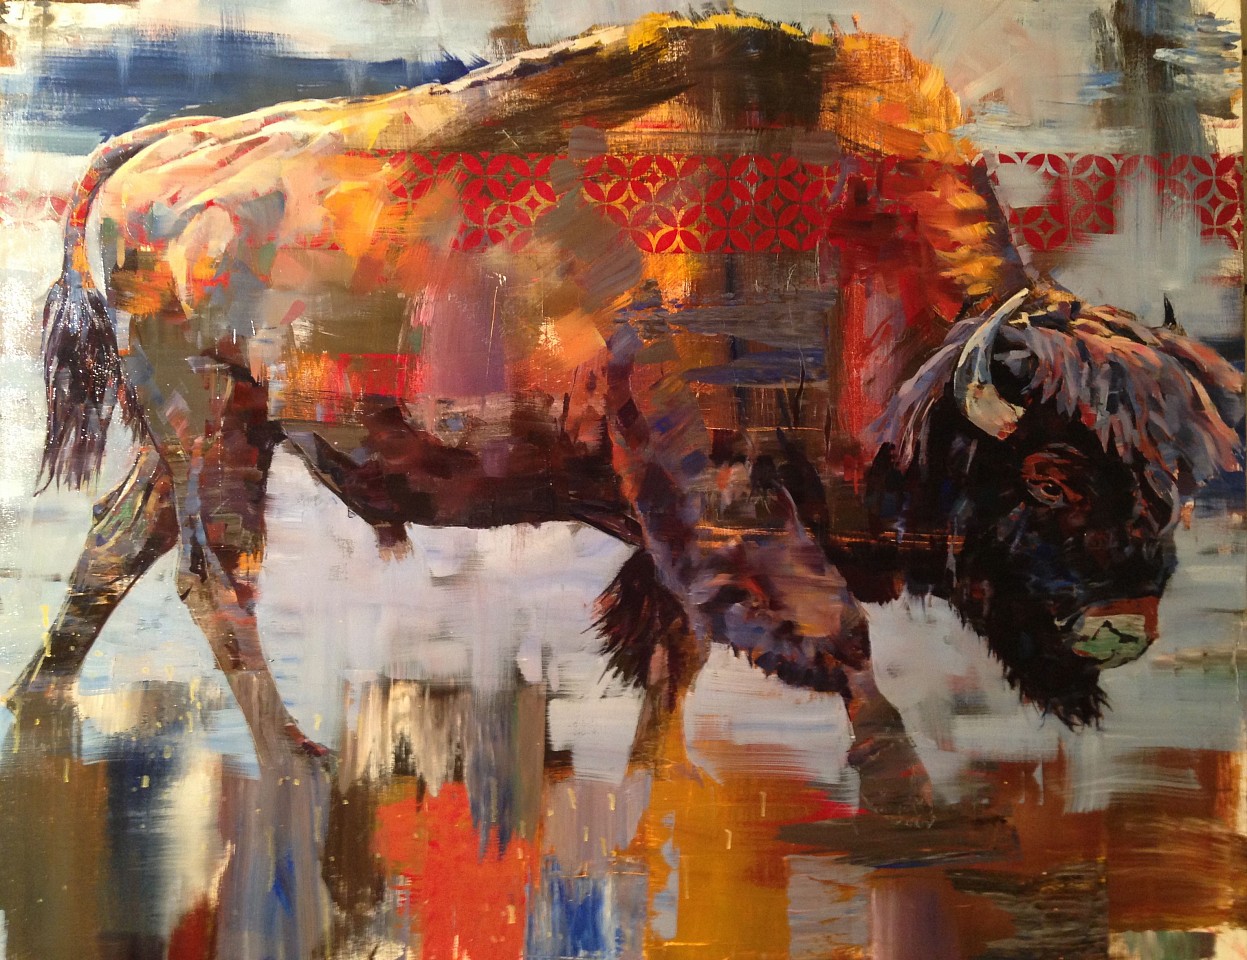 Douglas Schneider, American Beauty, 2015
Oil on Canvas, 40 x 50 in.
&bull;